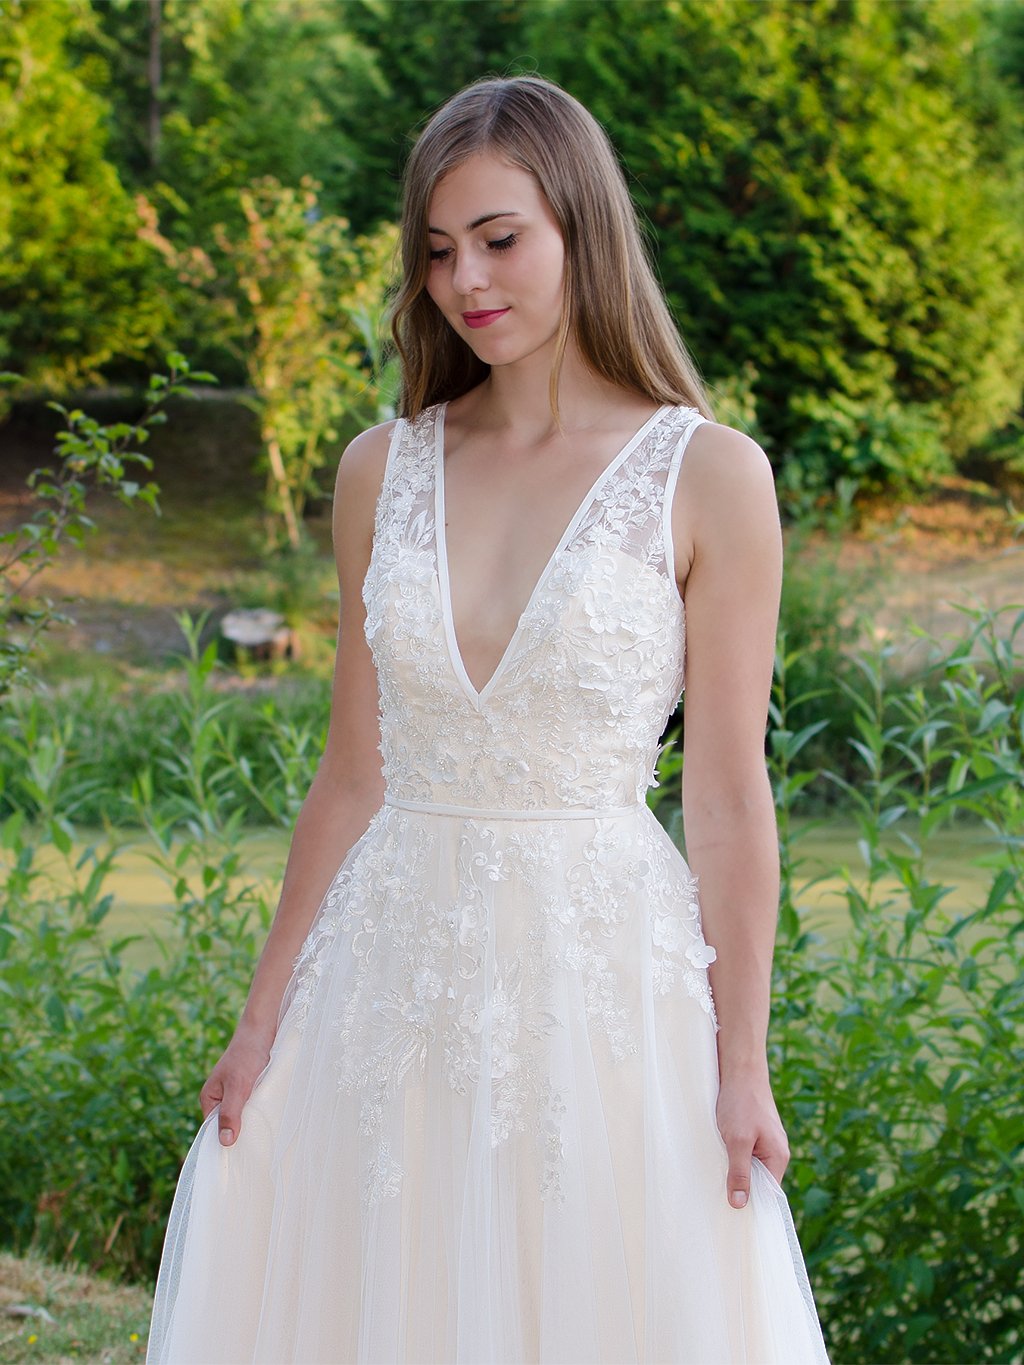 Sleeveless lace wedding dress with tulle skirts 4044-wedding